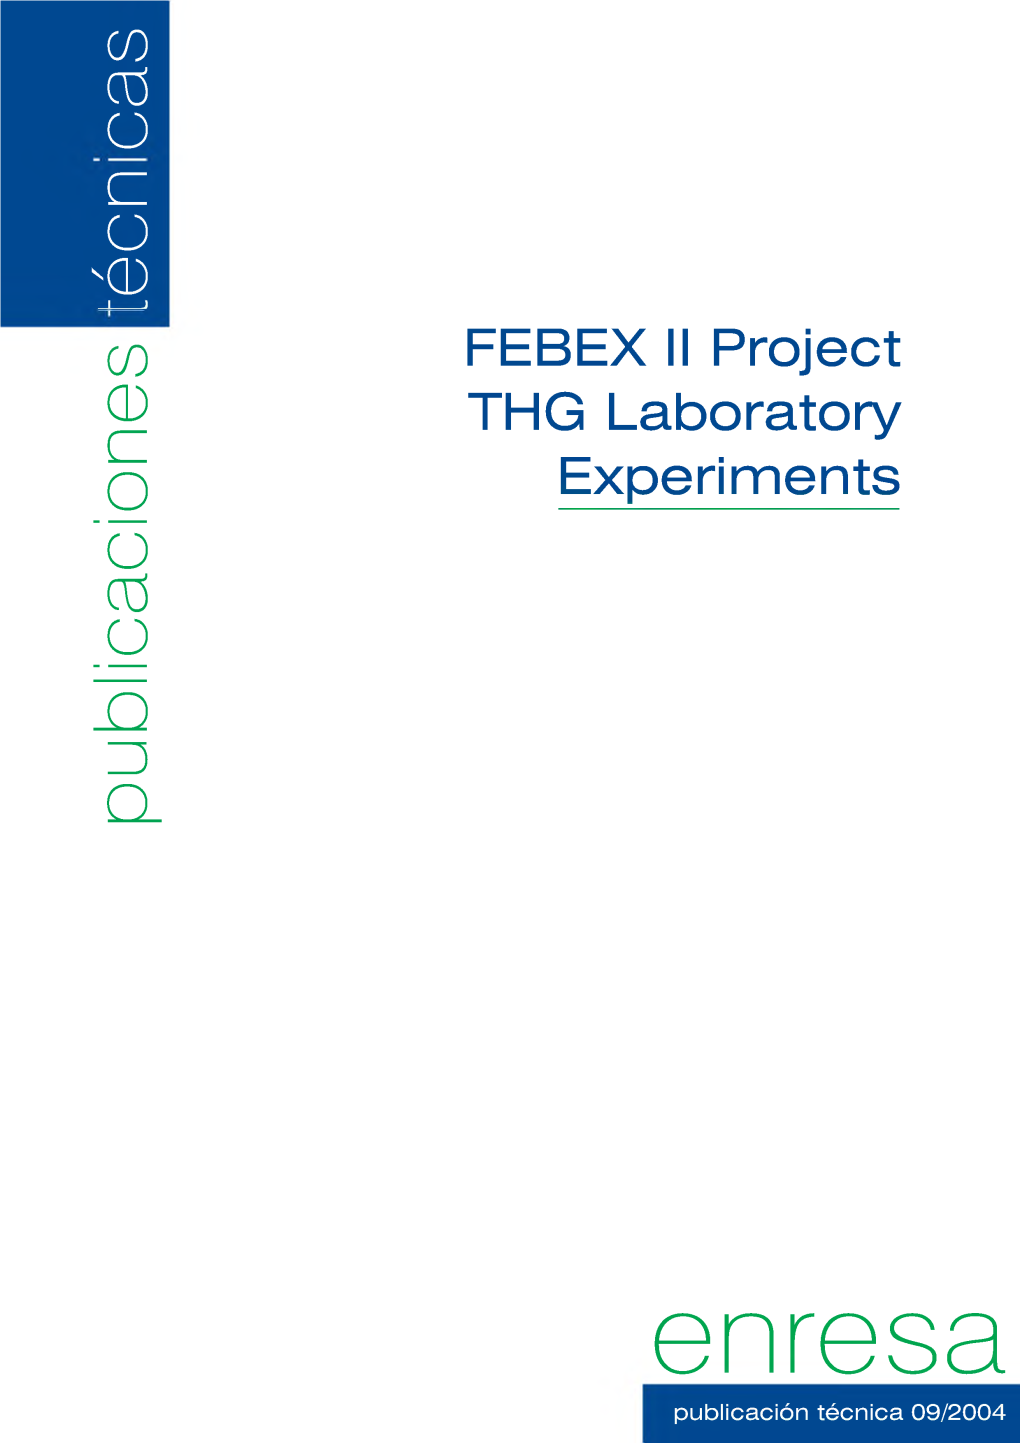 FEBEX II Project THG Laboratory Experiments